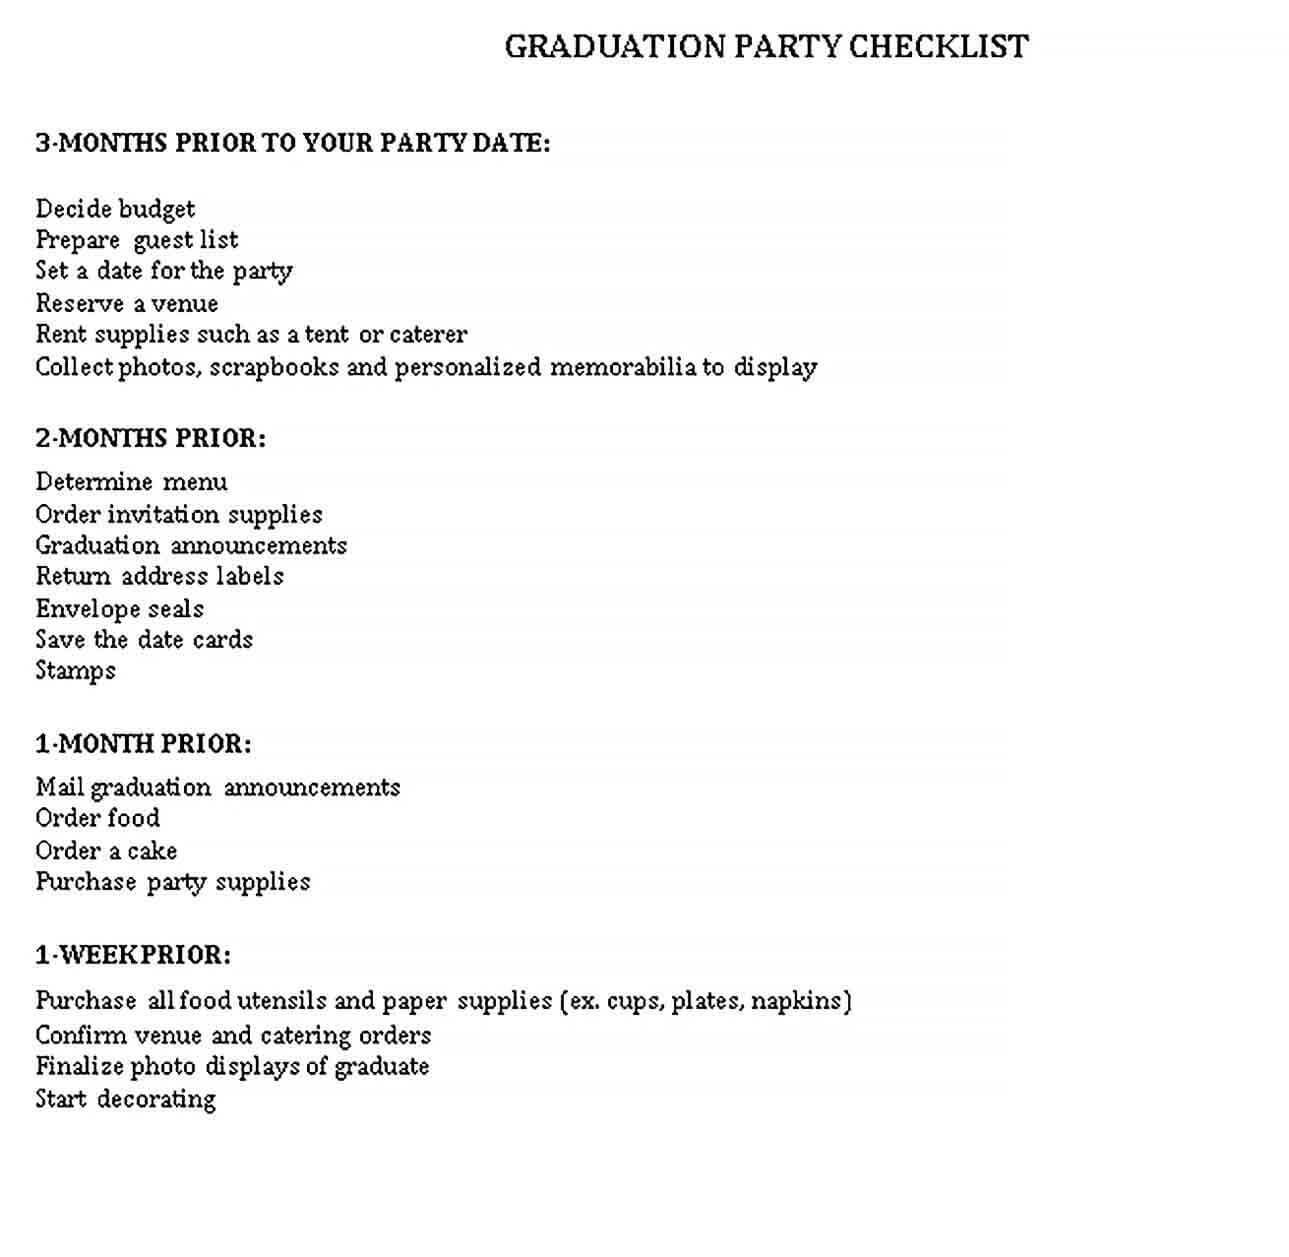 Sample Graduation Party Checklist Template